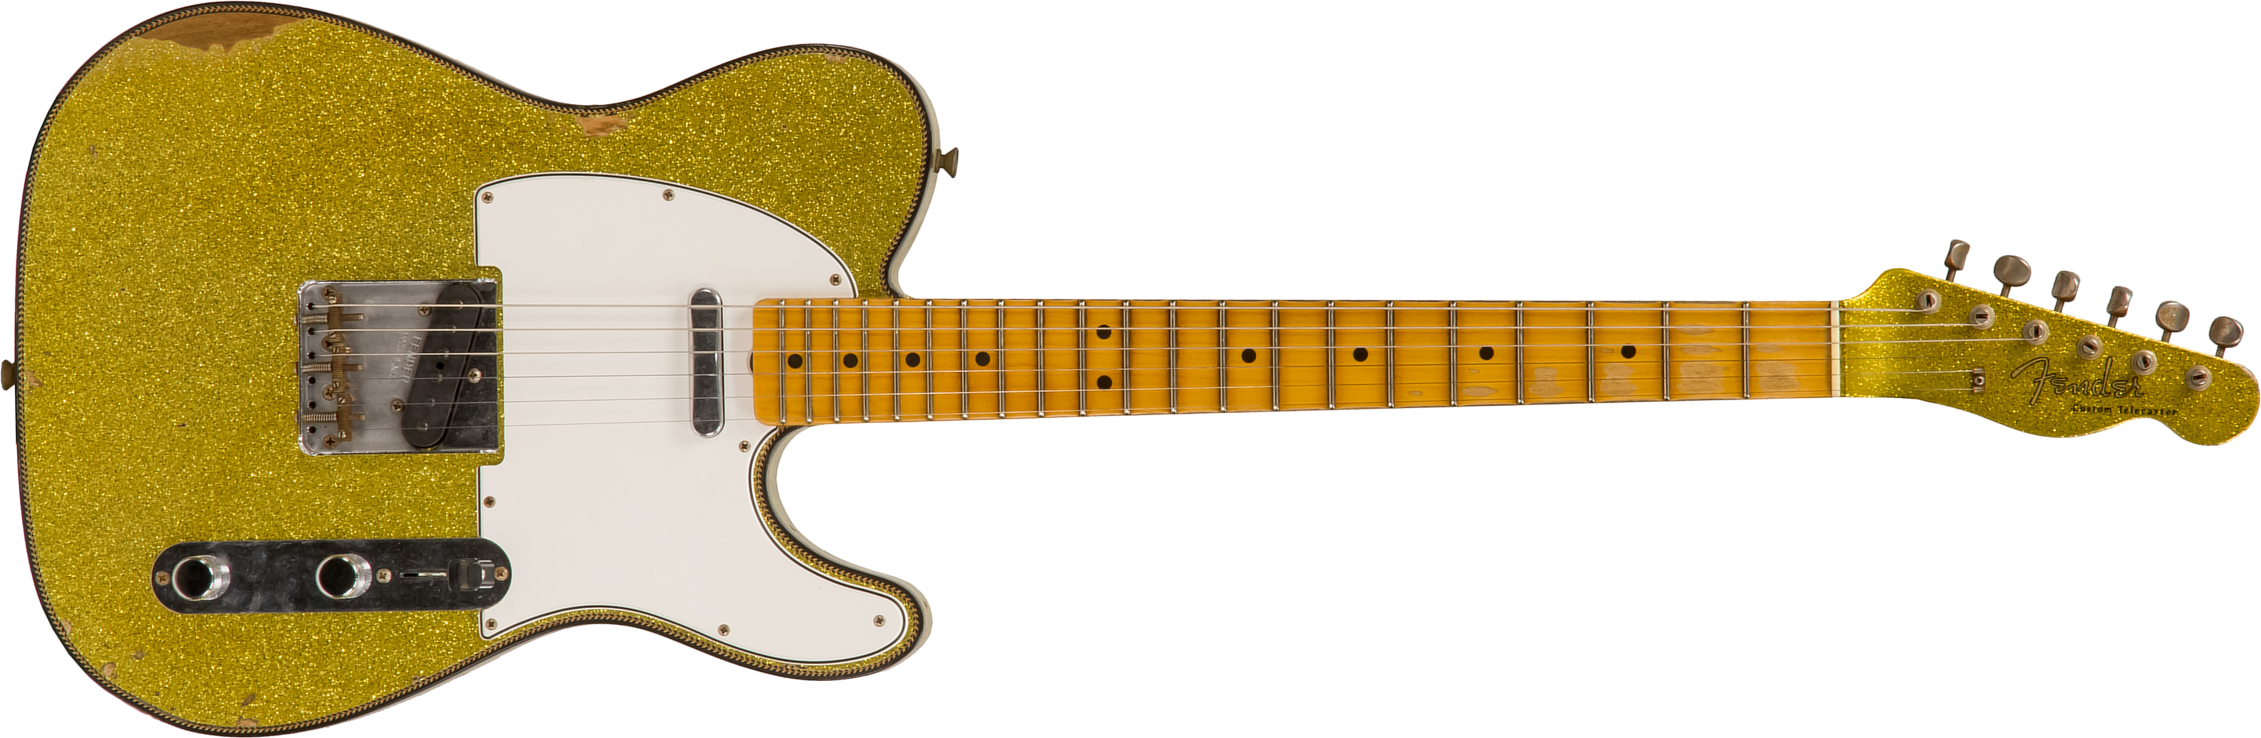 Fender Custom Shop Tele Custom 1963 2020 Ltd Rw #cz545983 - Relic Chartreuse Sparkle - E-Gitarre in Teleform - Main picture